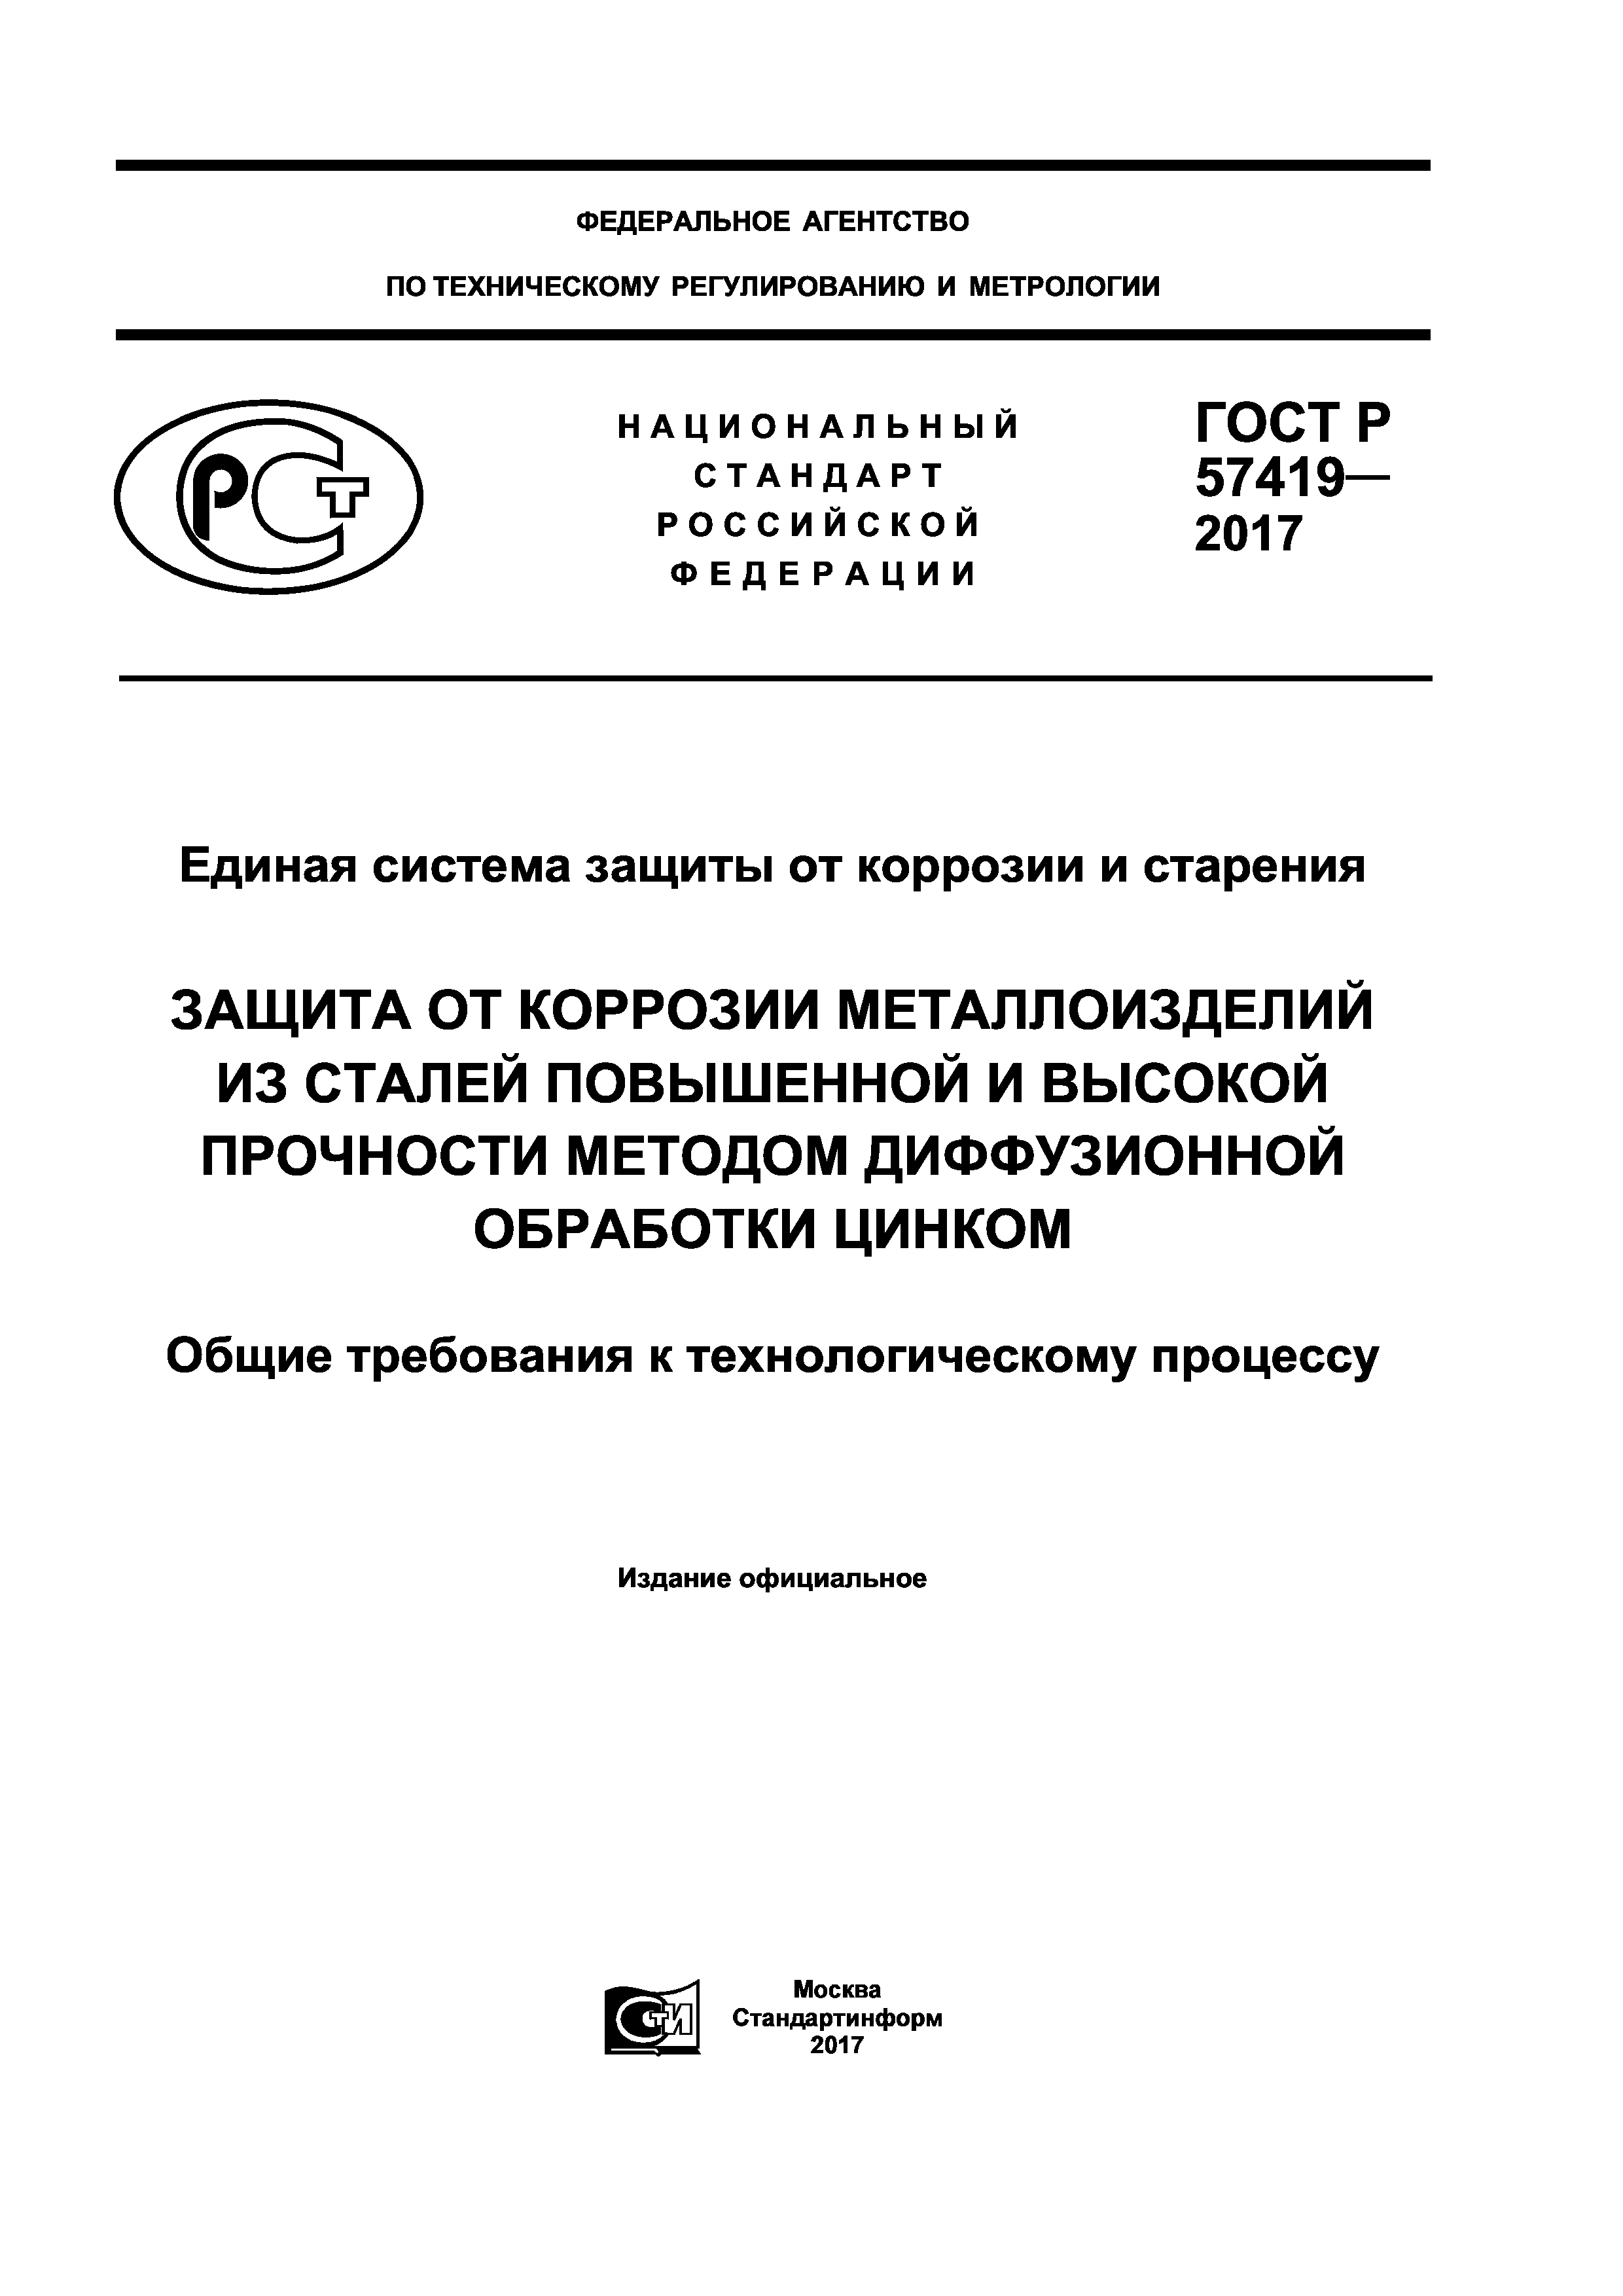 ГОСТ Р 57419-2017